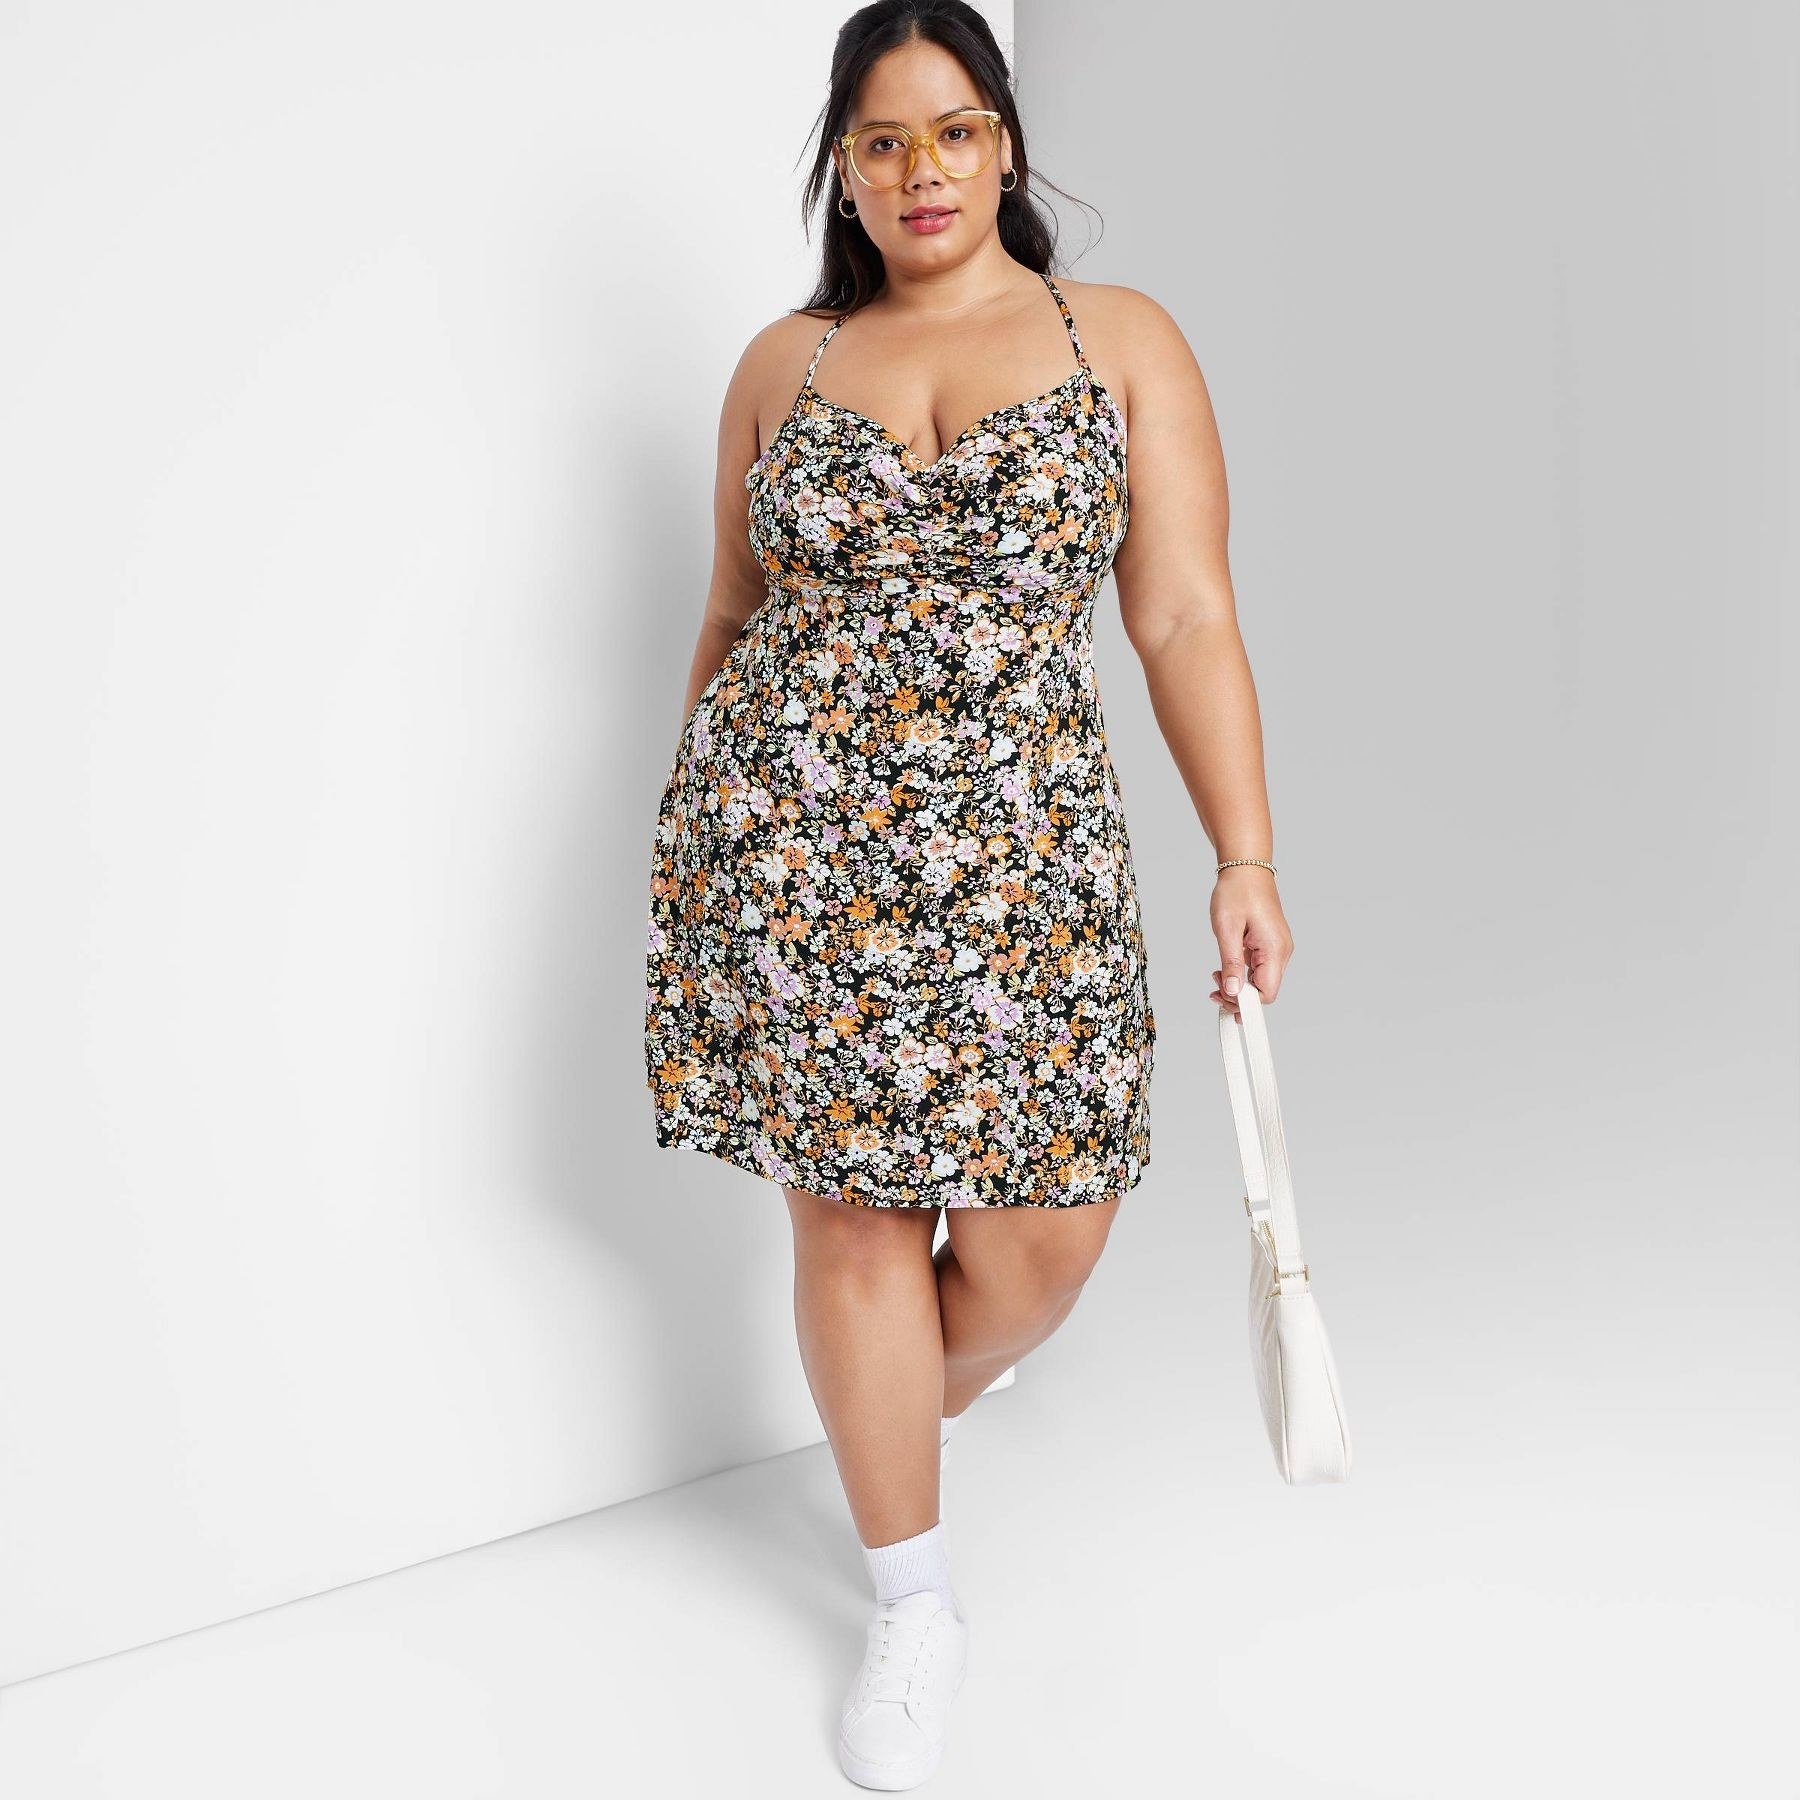 model wearing the dress in a floral pattern